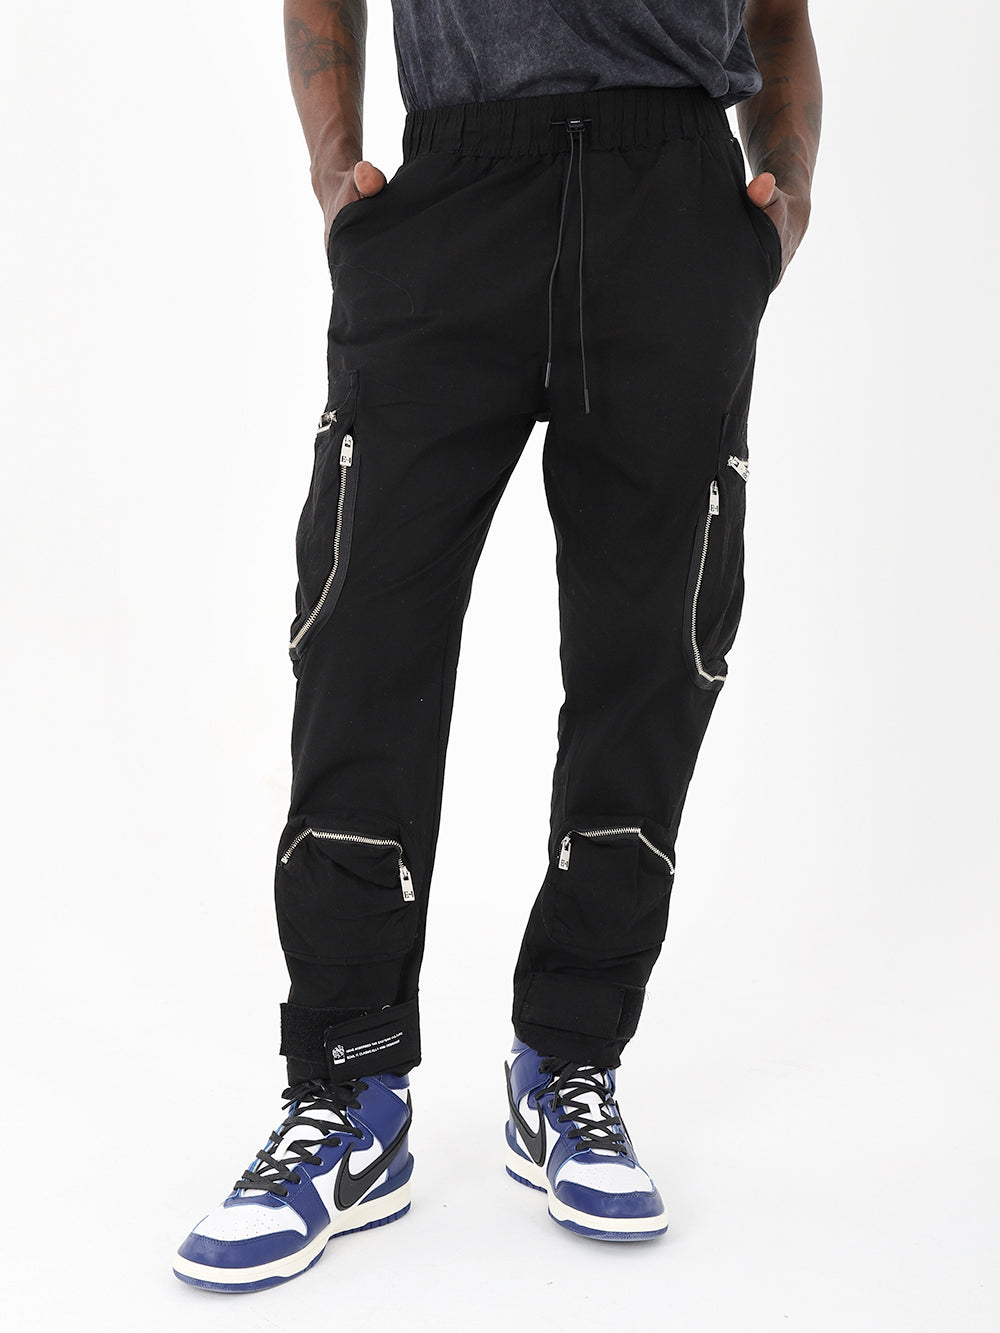 A man wearing Raider jogger pants with zippered pockets.